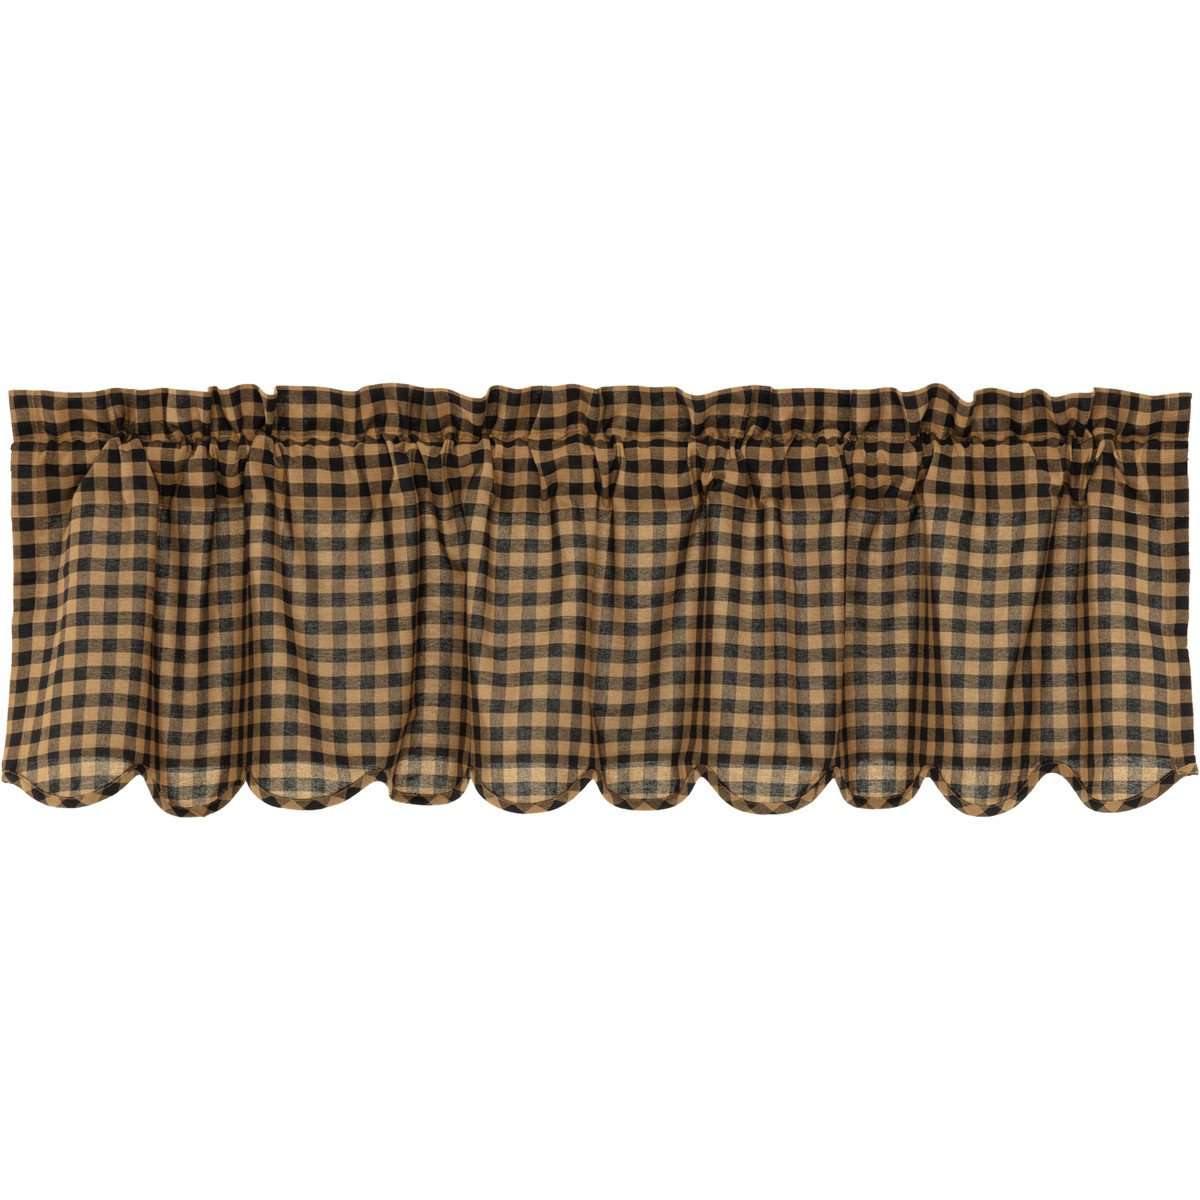 Black Check Scalloped Valance Curtain 16x60 VHC Brands - The Fox Decor